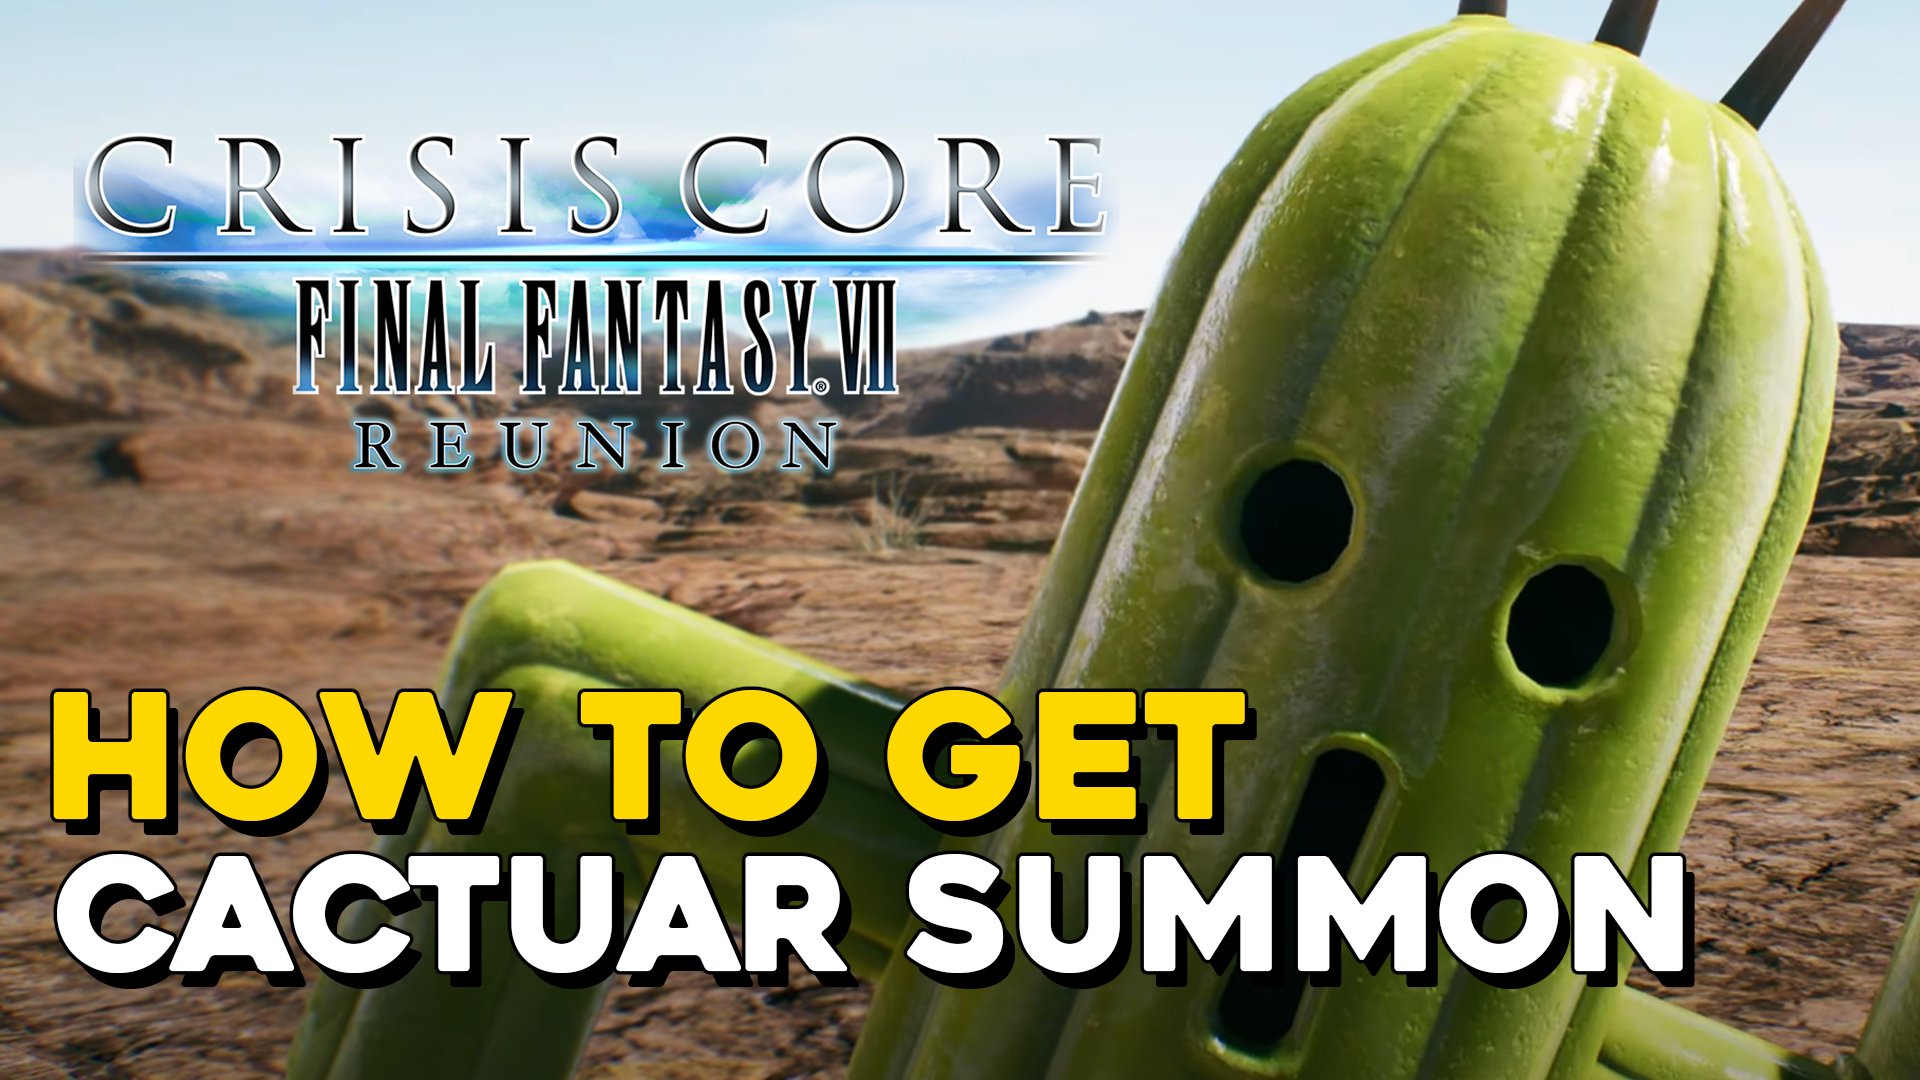 Crisis Core Final Fantasy 7 Reunion How To Get Cactuar Summon DMW.jpg